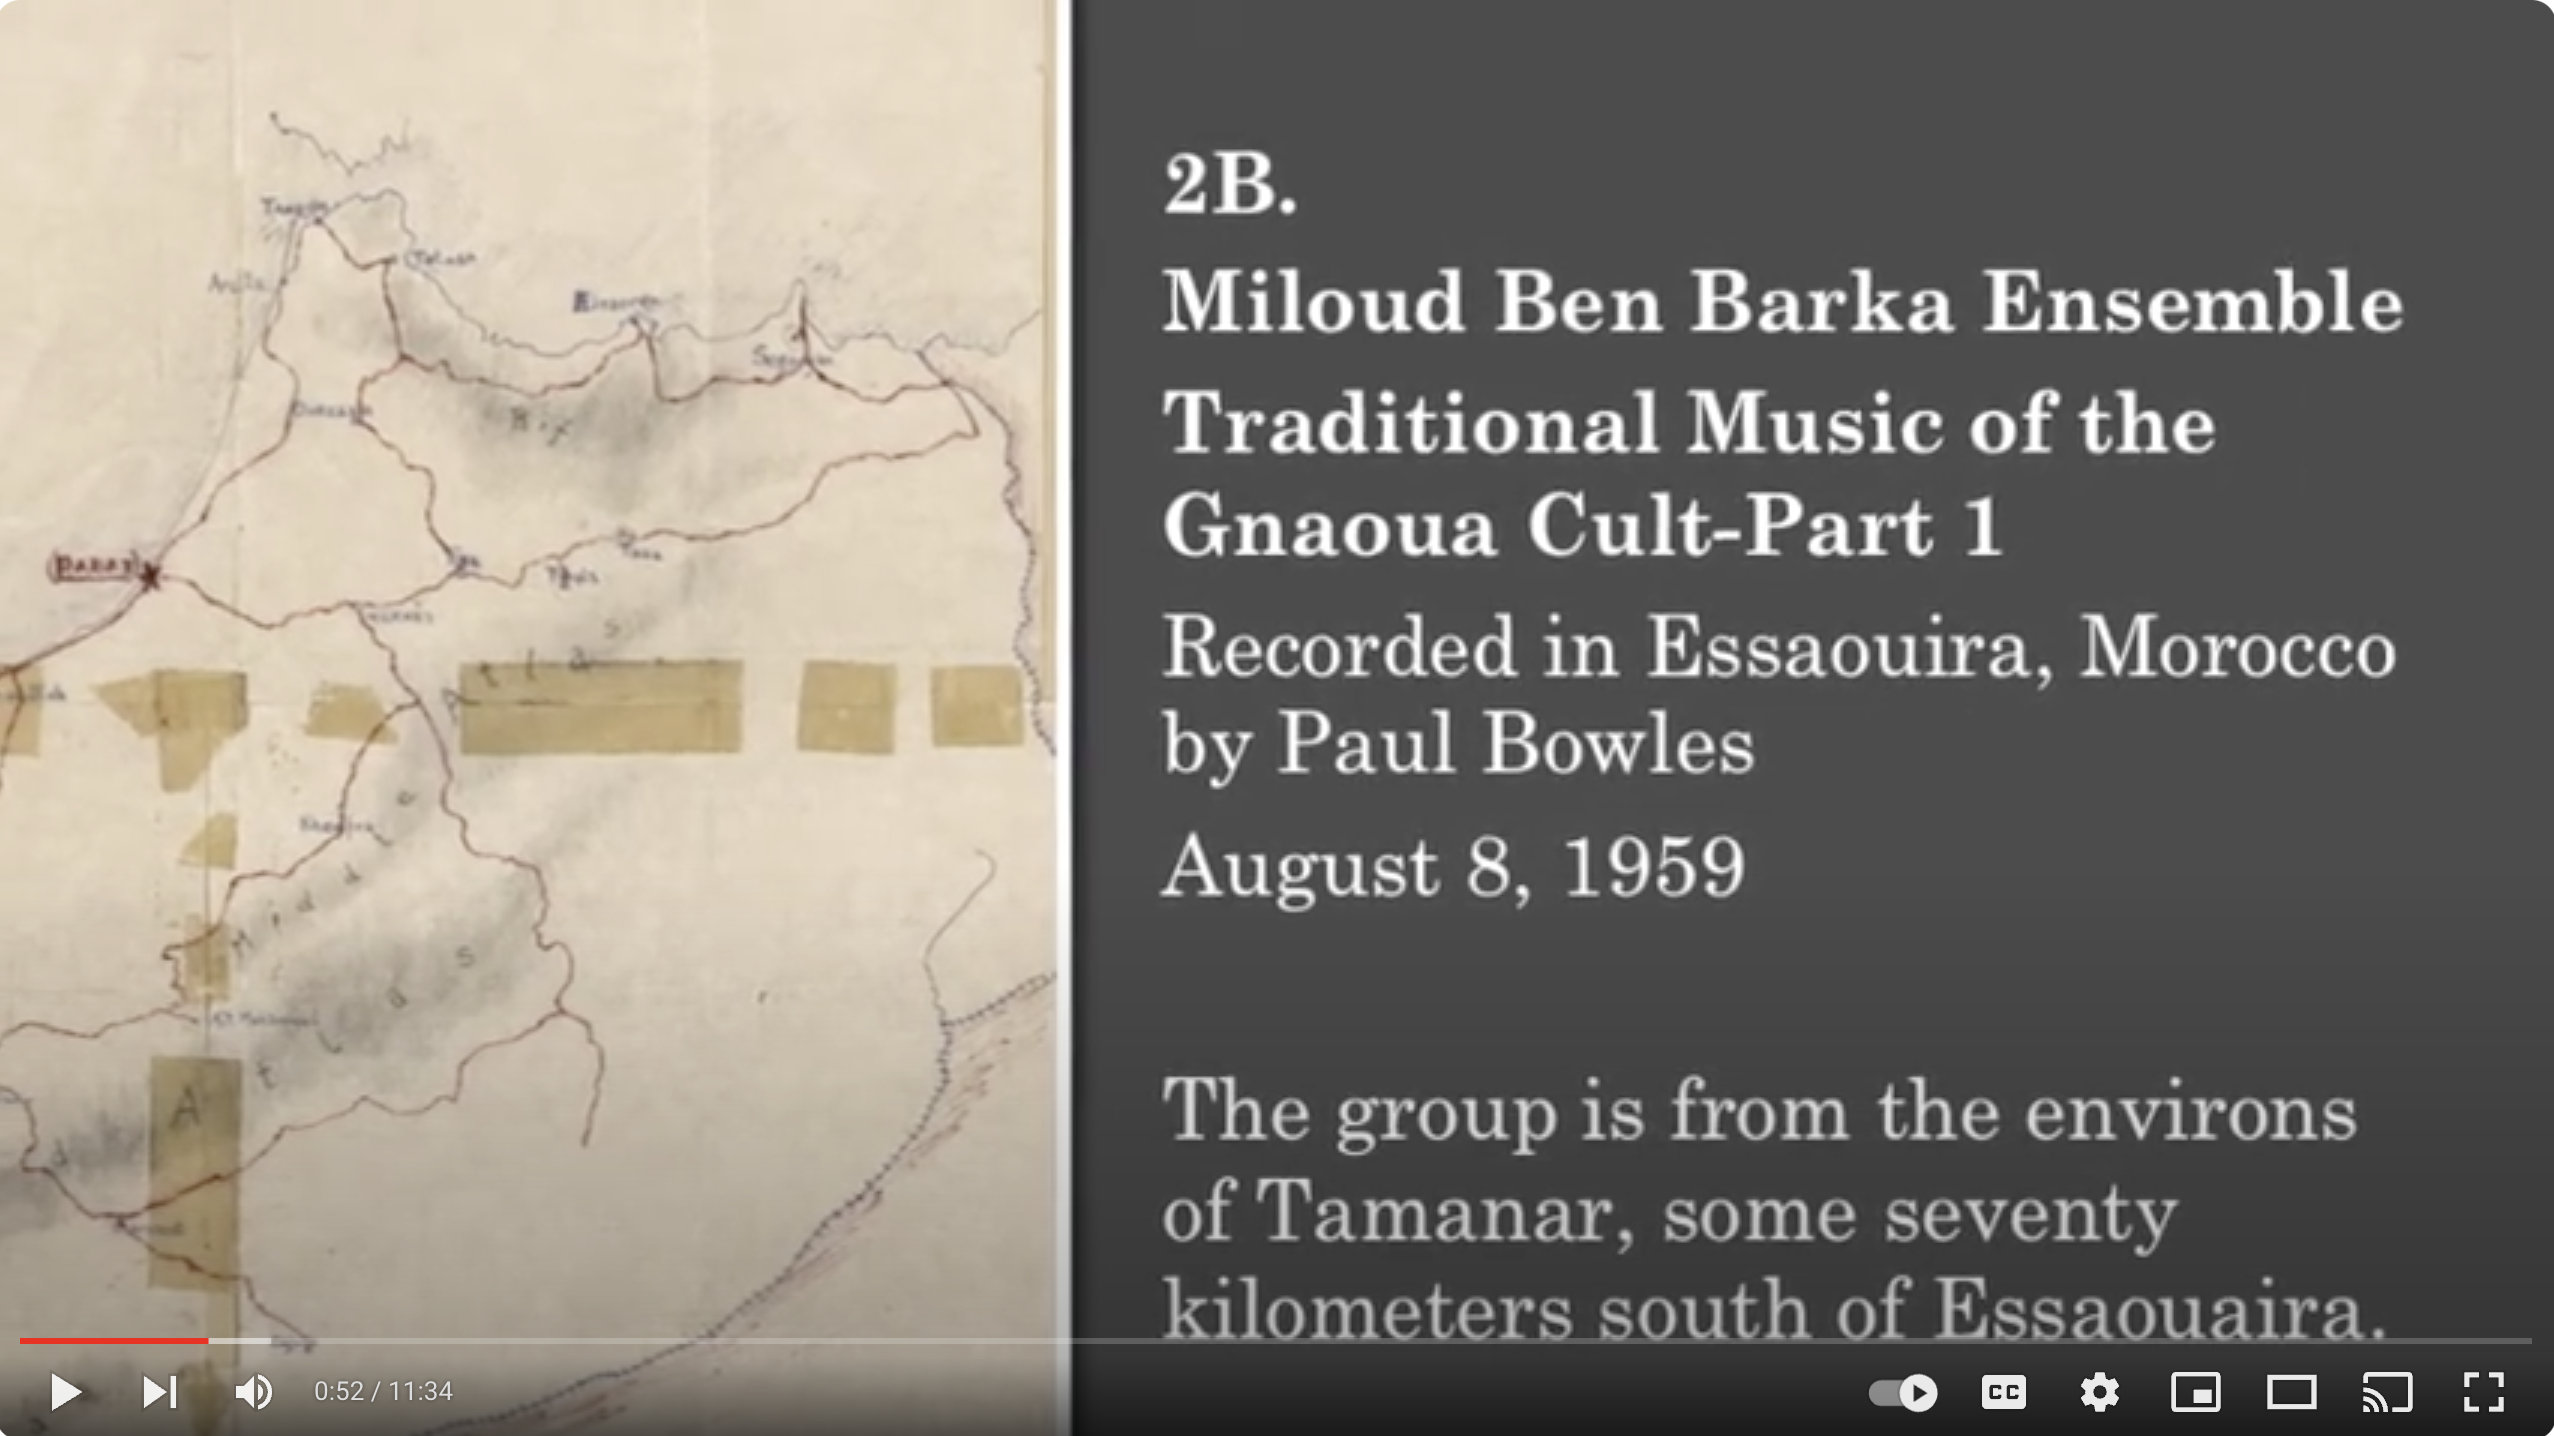 <p>Miloud Ben Barka Ensemble, Traditional Music of the Gnaoua Cult-Part 1</p>